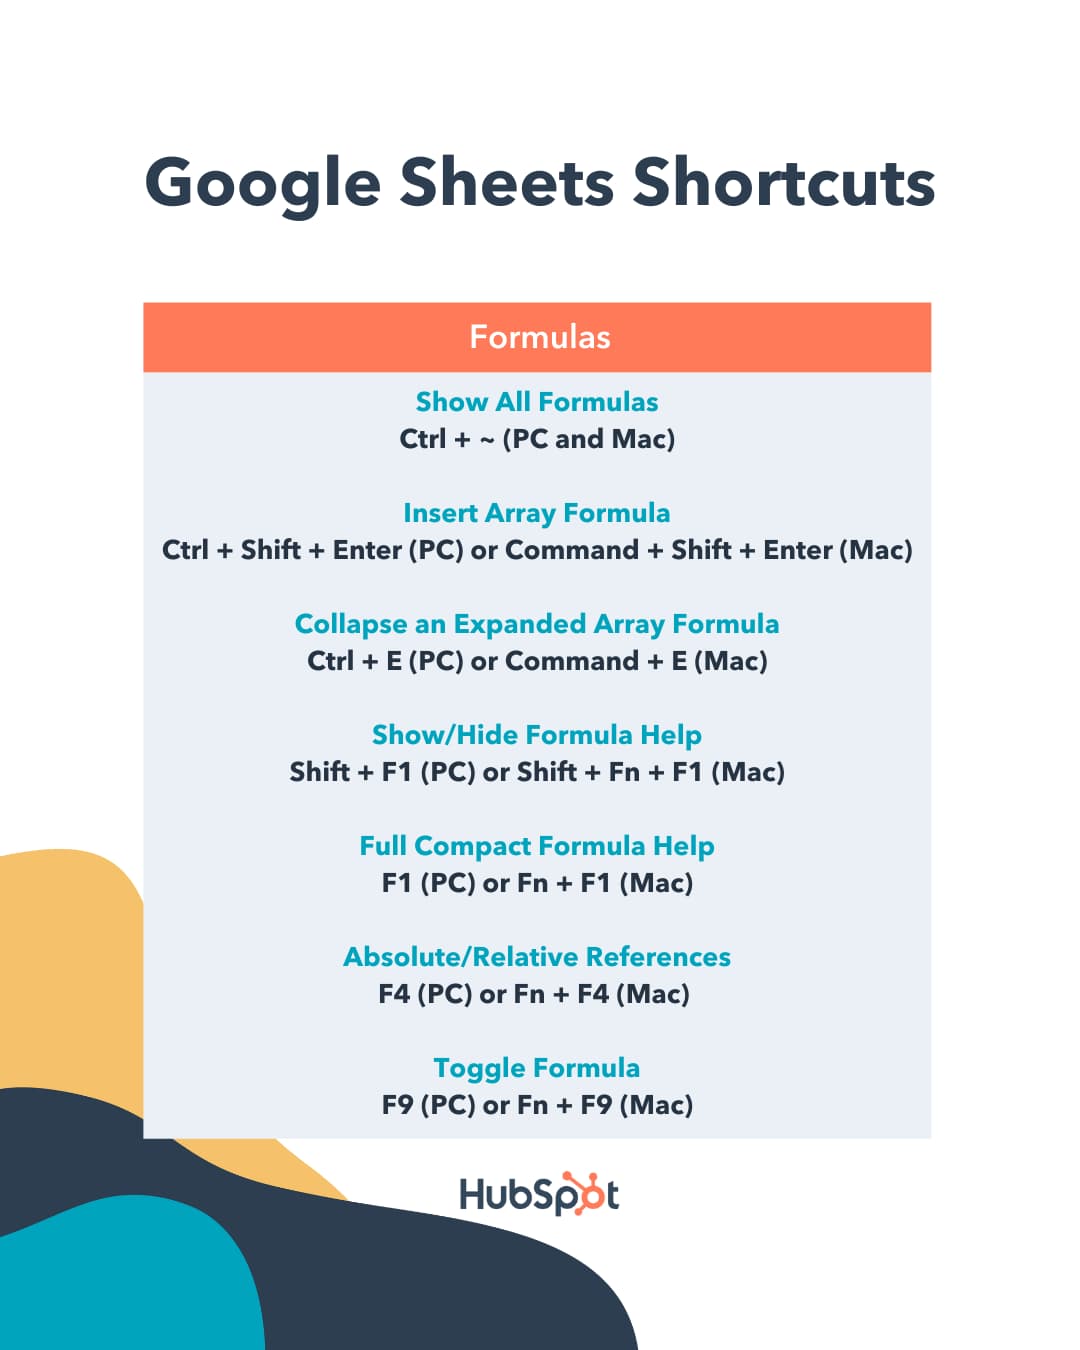 Use Google Sheets shortcuts to display all formulas, insert array formulas, and more